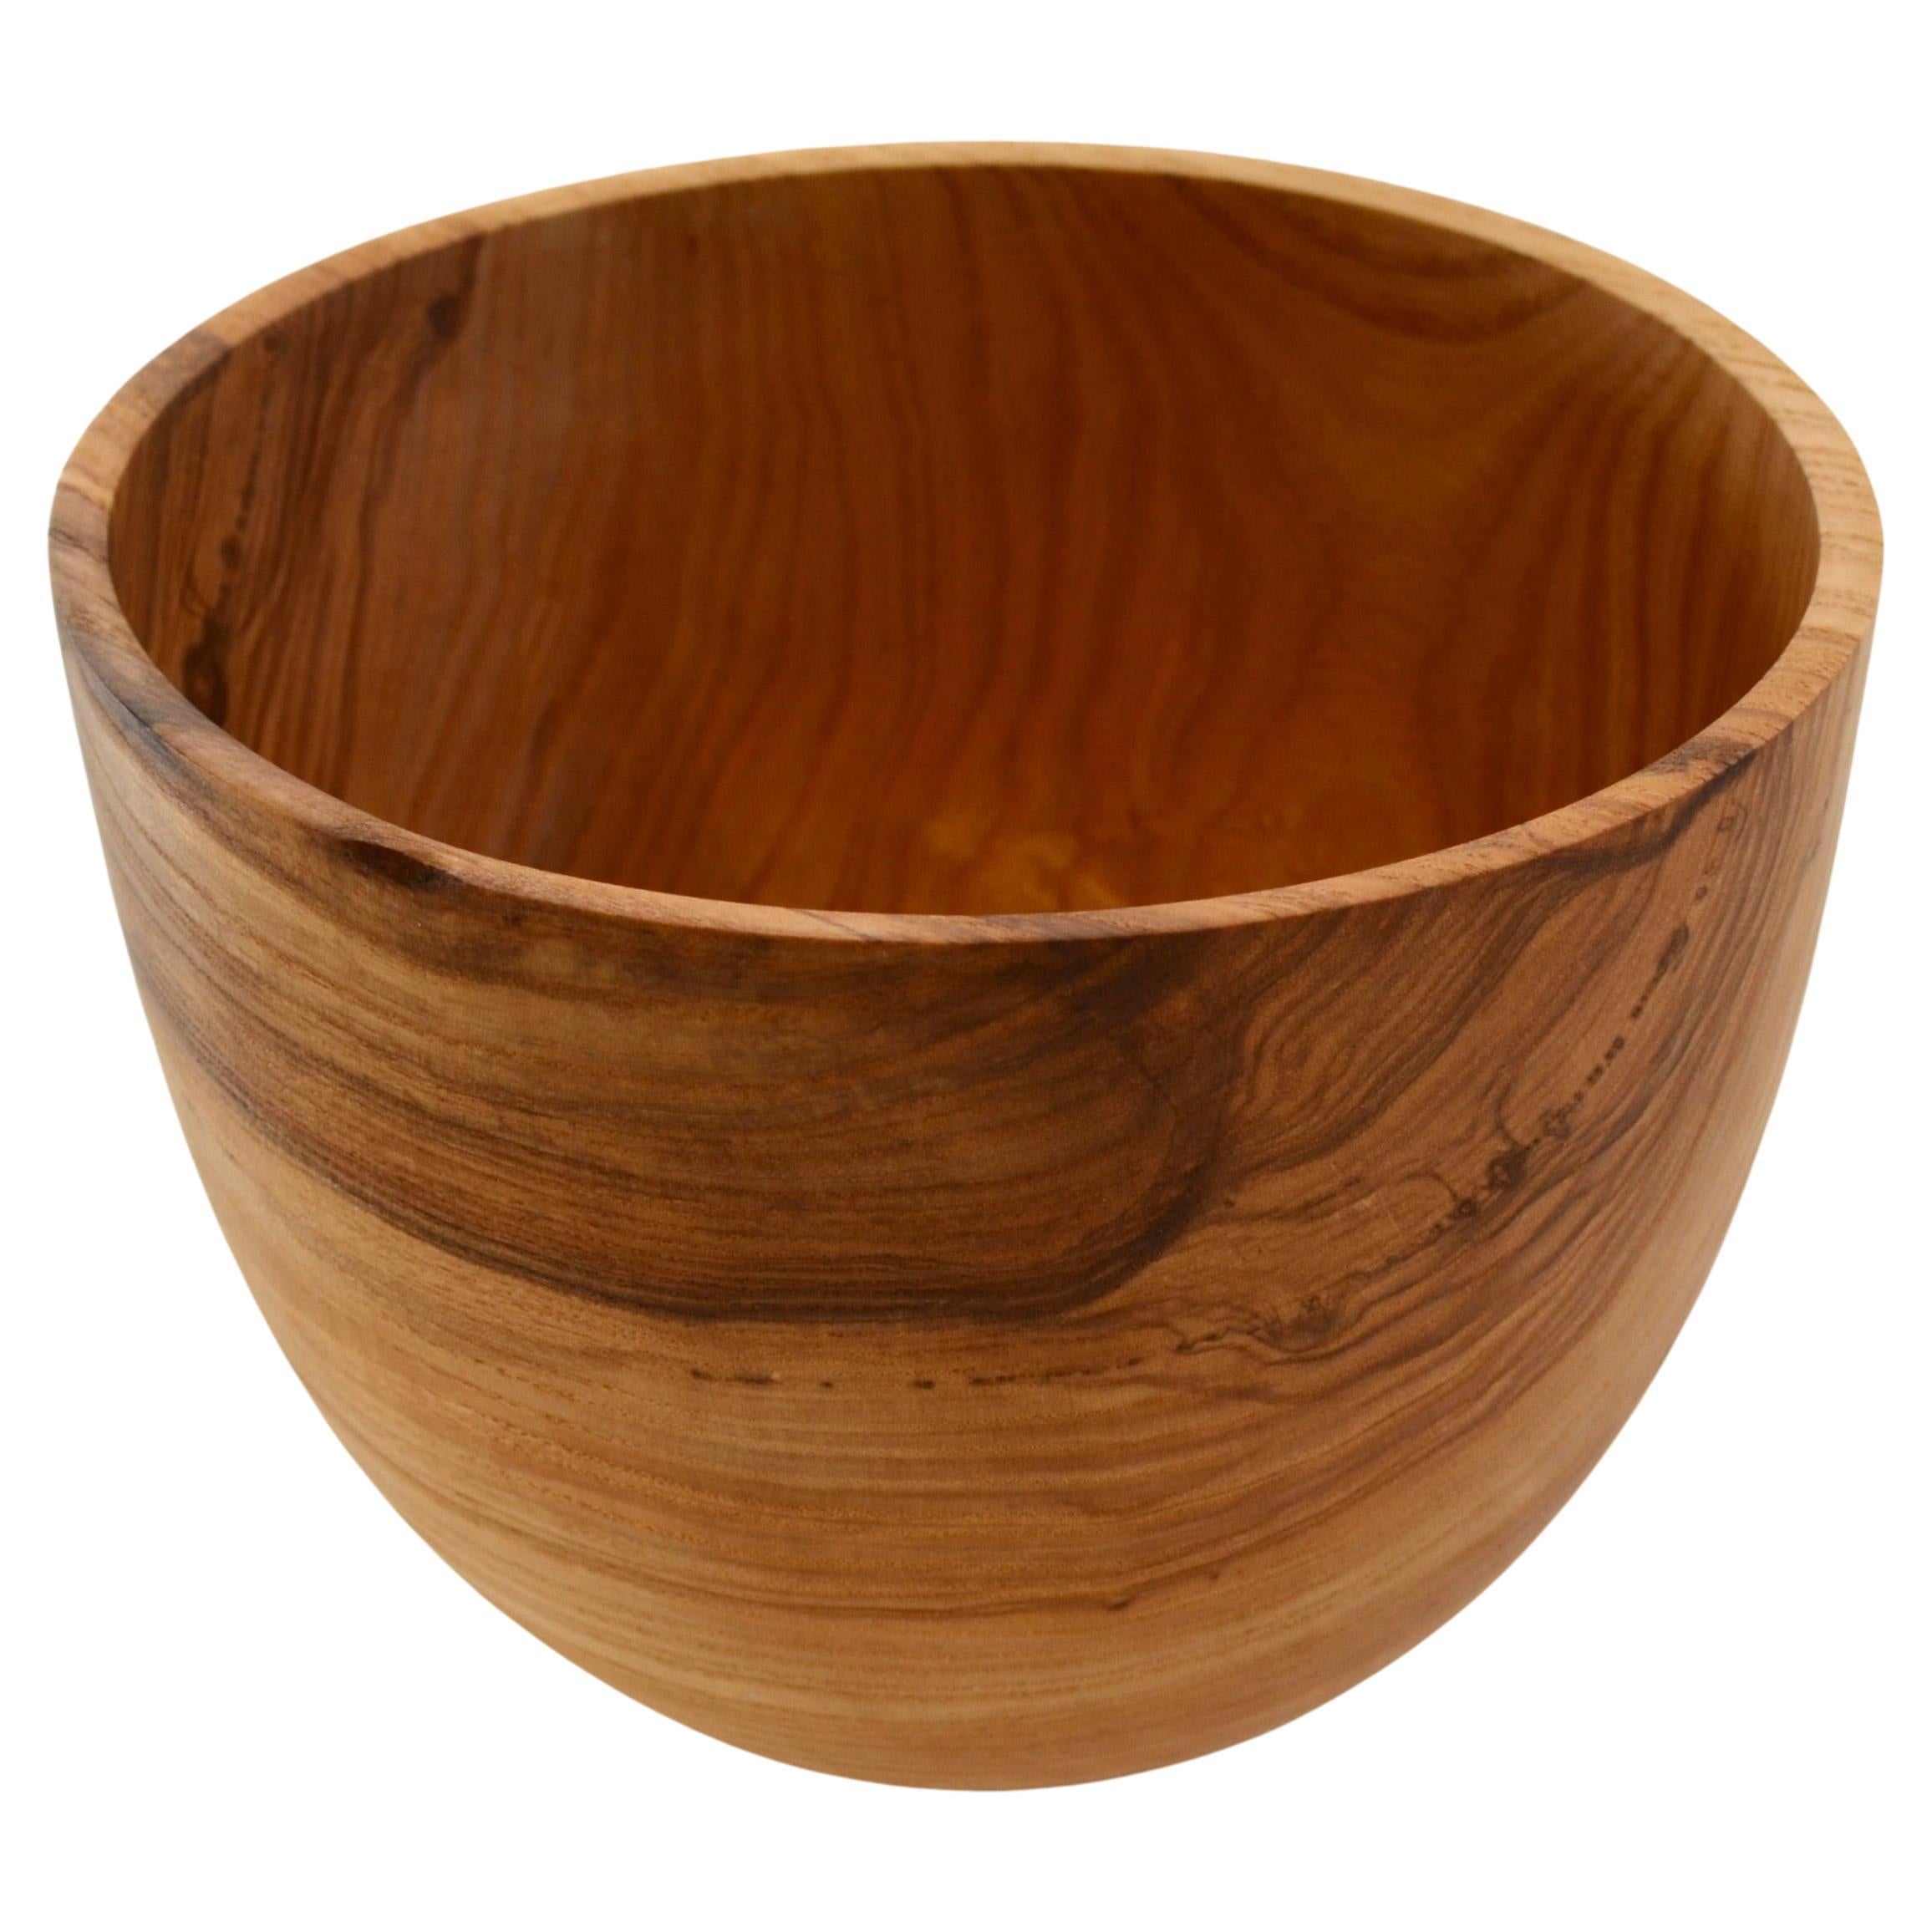 Hand-Carved Natural Ash Wood Bowl